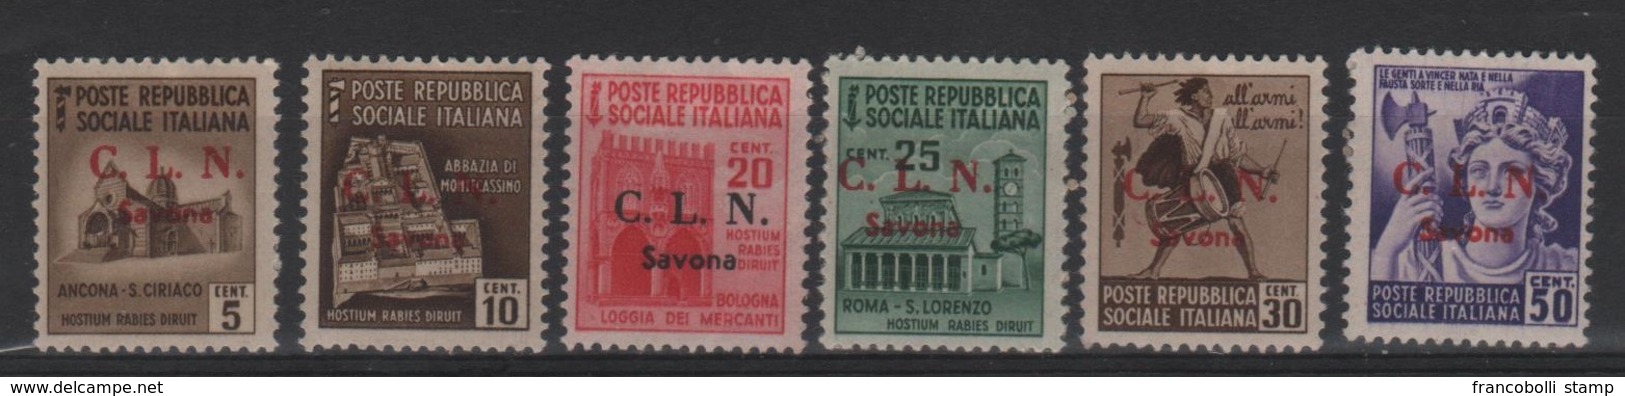 1945 C.L.N. Savona Lotto - Comite De Liberación Nacional (CLN)